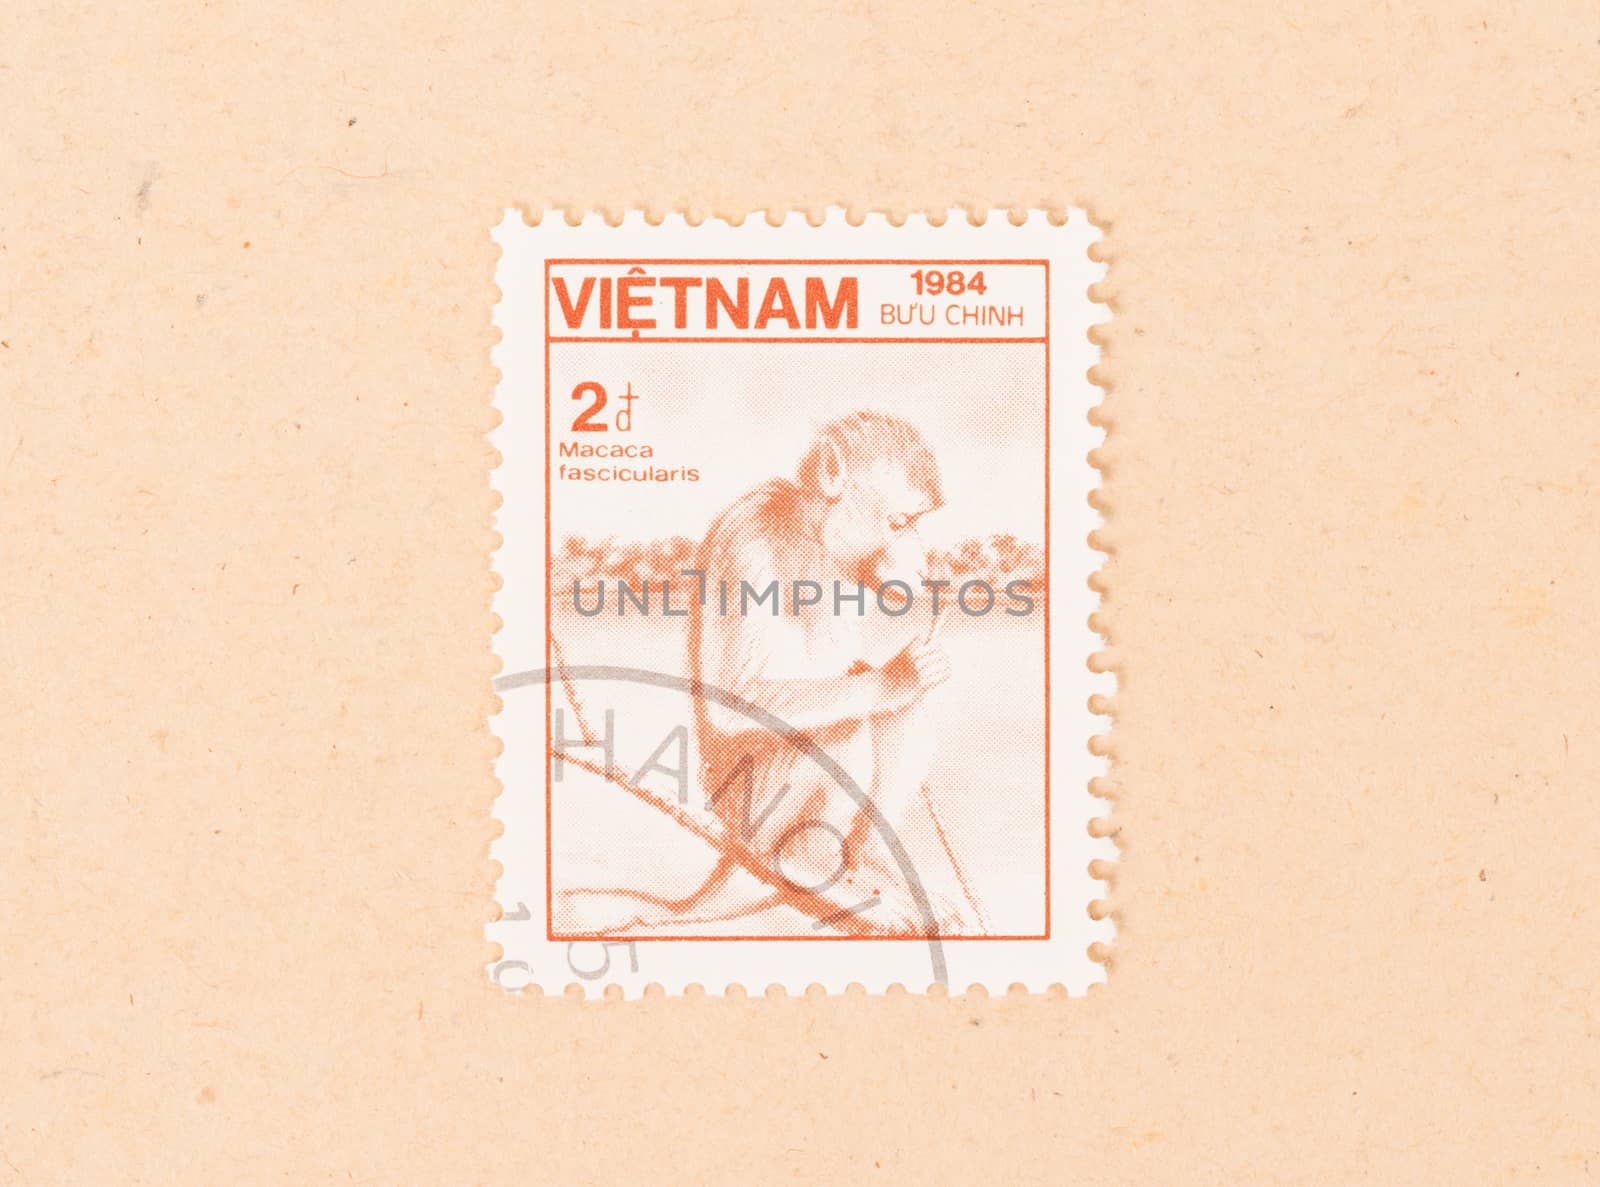 VIETNAM - CIRCA 1984: A stamp printed in Vietnam shows a monkey, by michaklootwijk